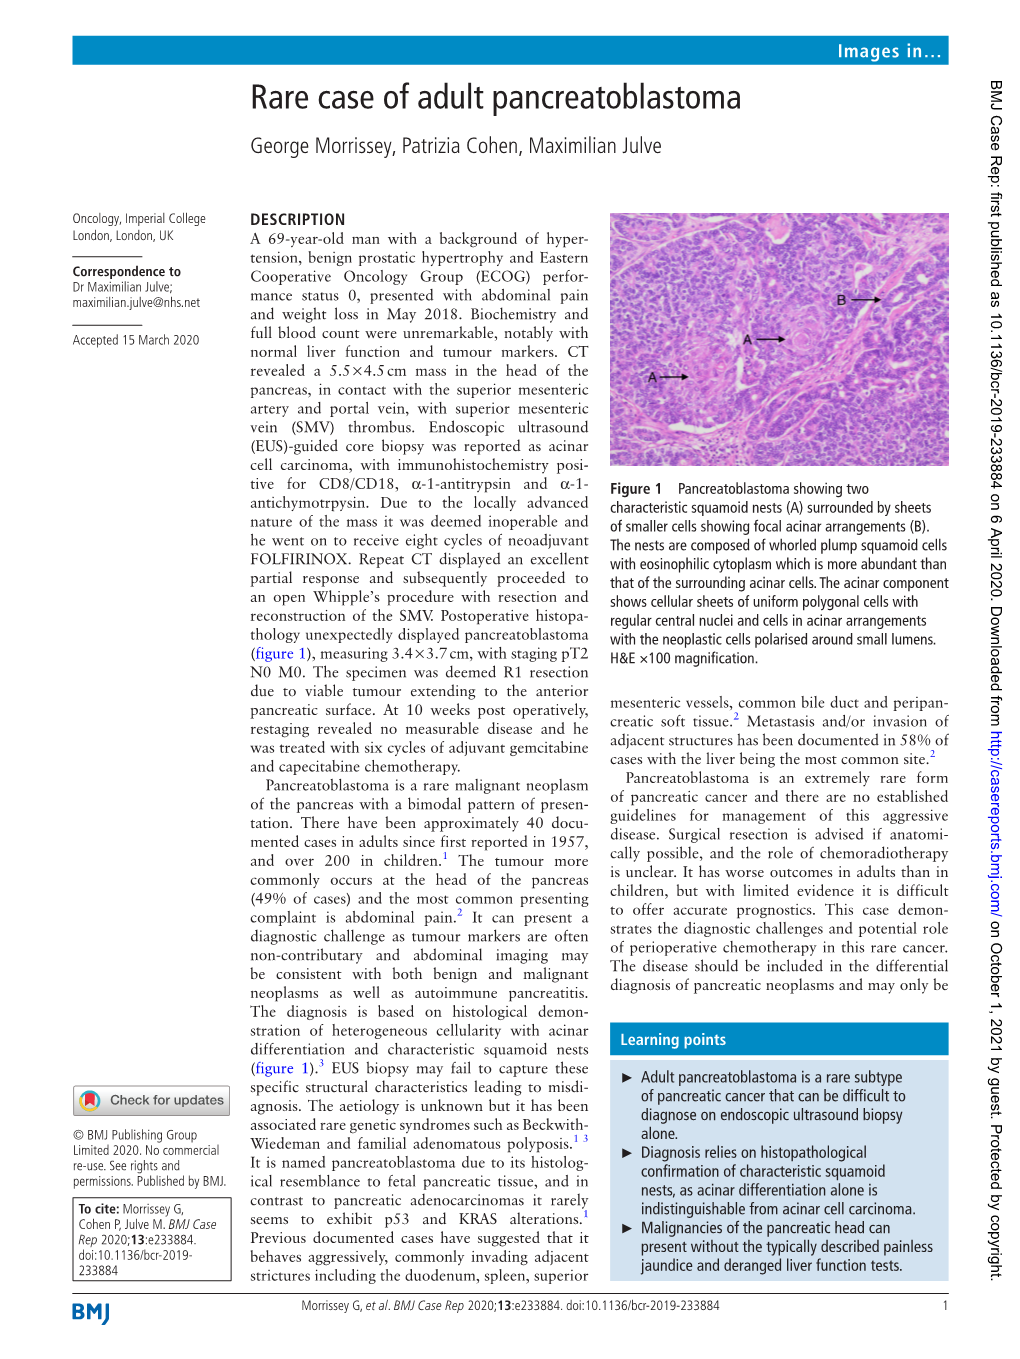 Rare Case of Adult Pancreatoblastoma George Morrissey, Patrizia Cohen, Maximilian Julve